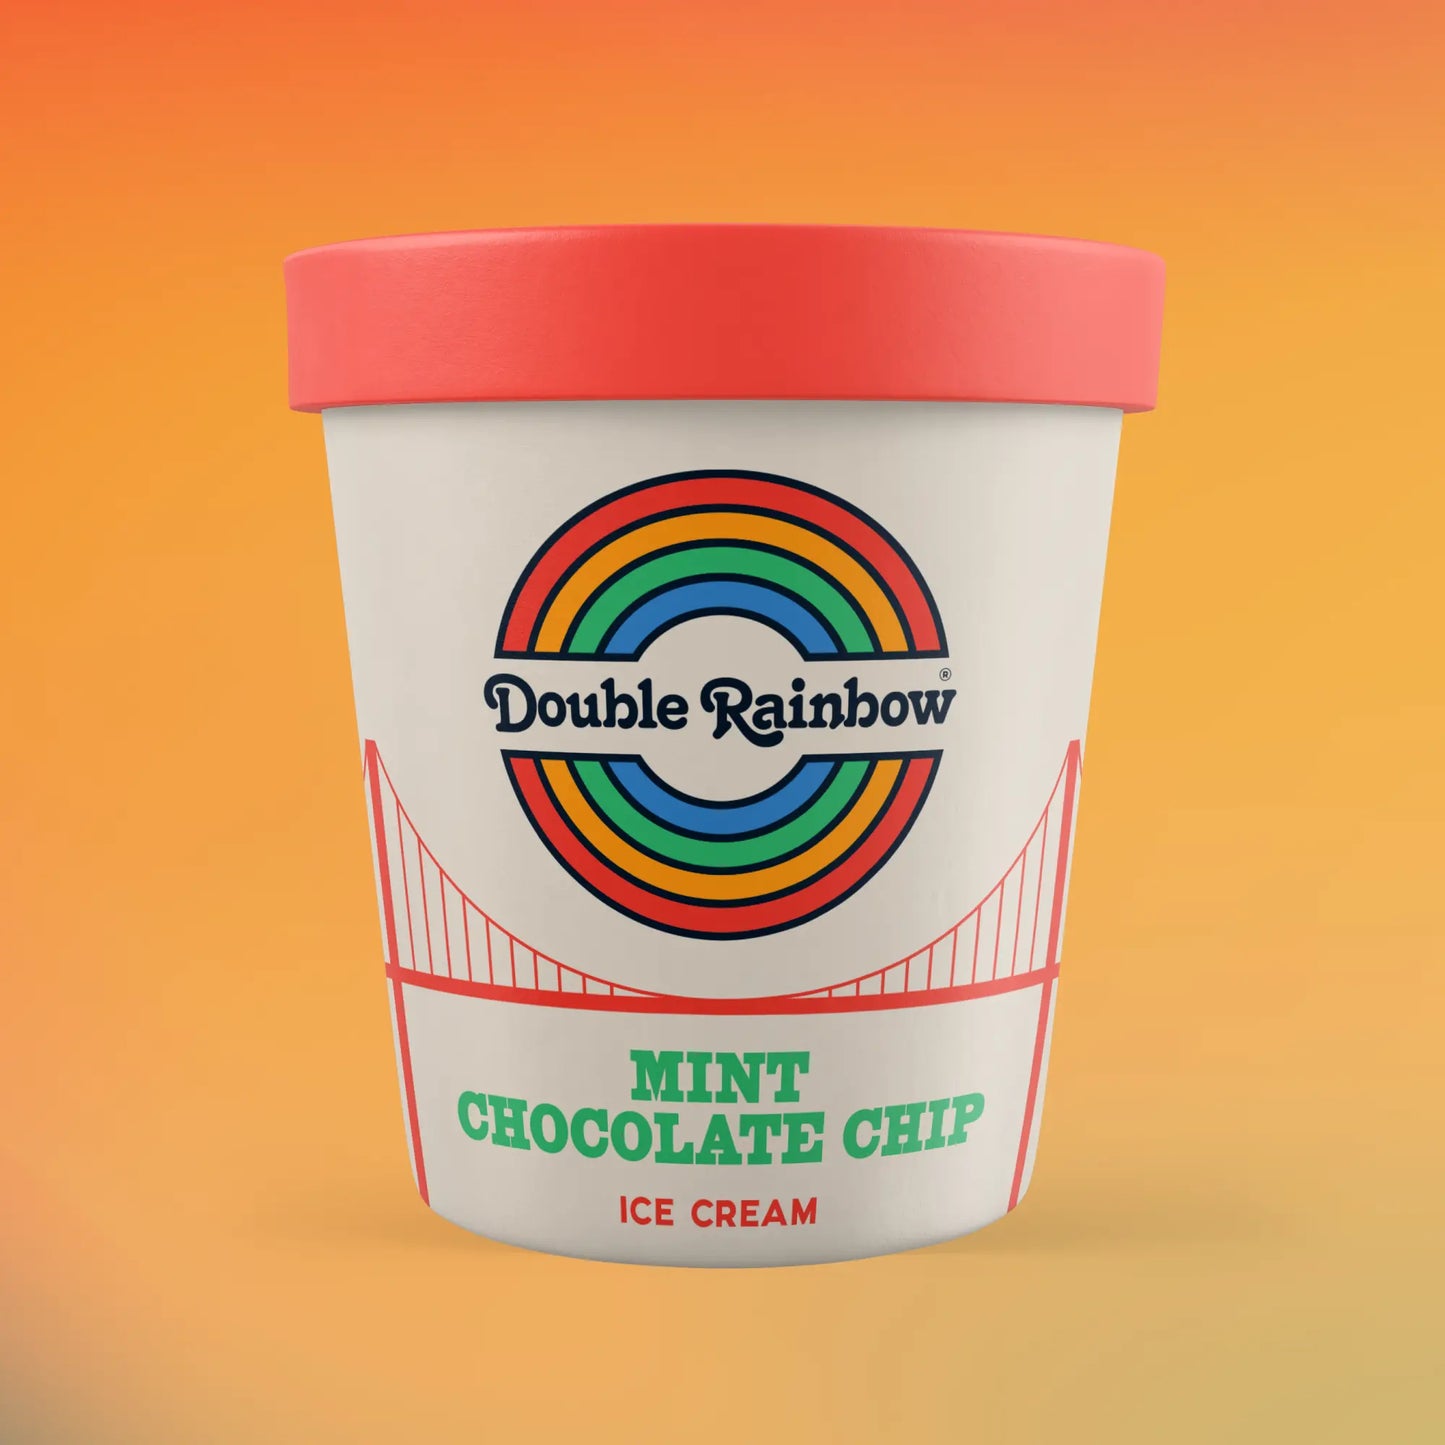 Double Rainbow Mint Chocolate Chip